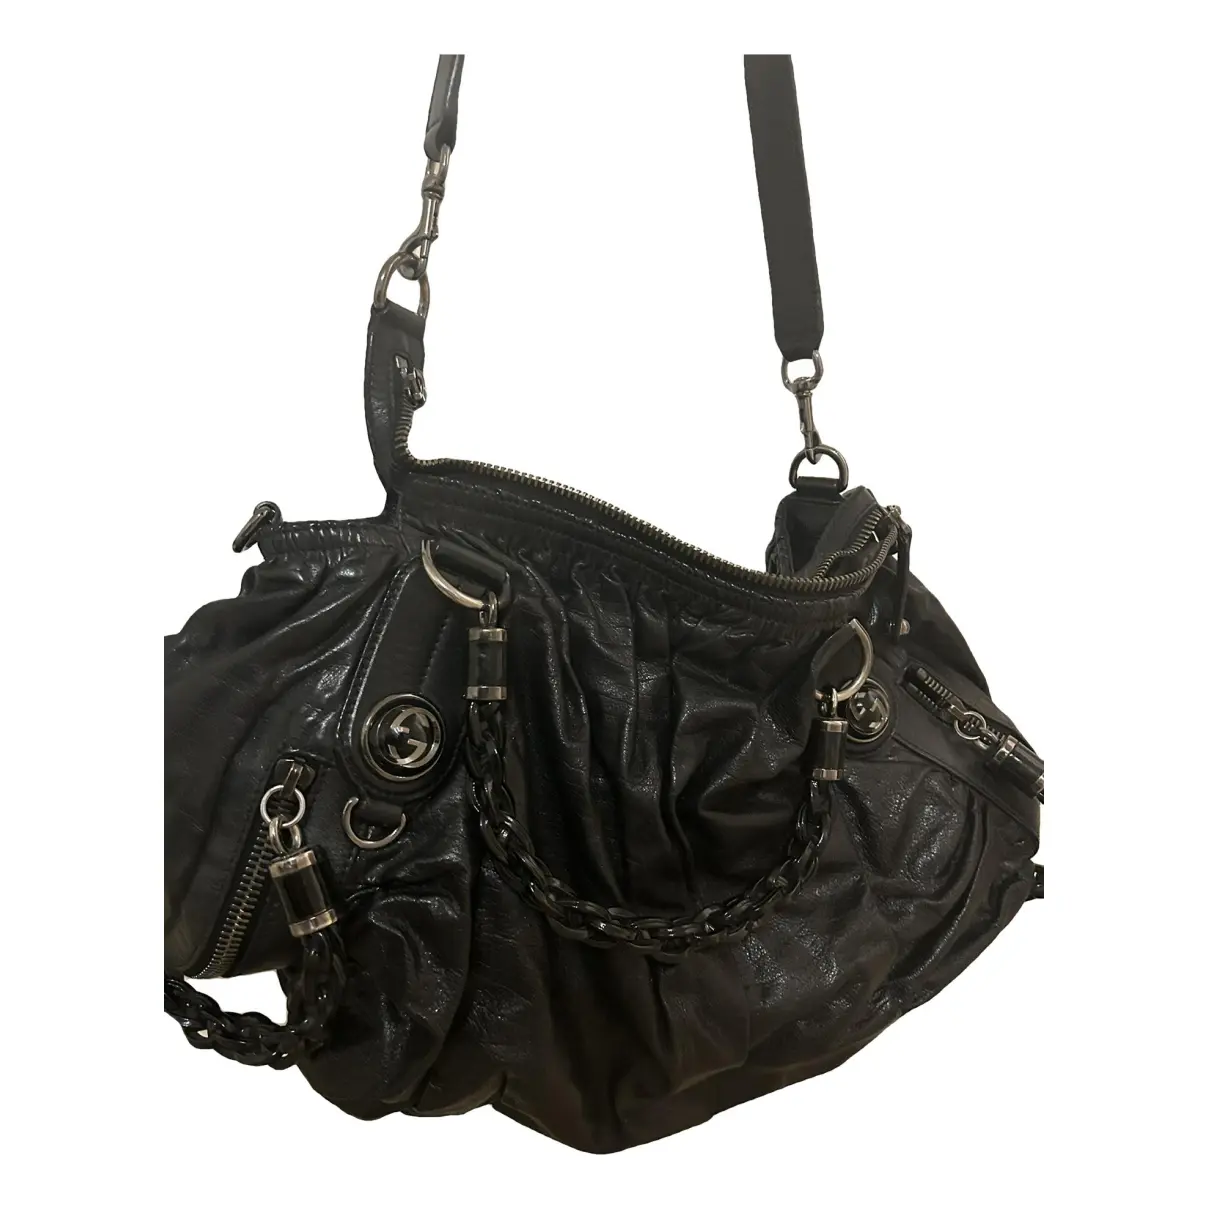 Hysteria leather crossbody bag